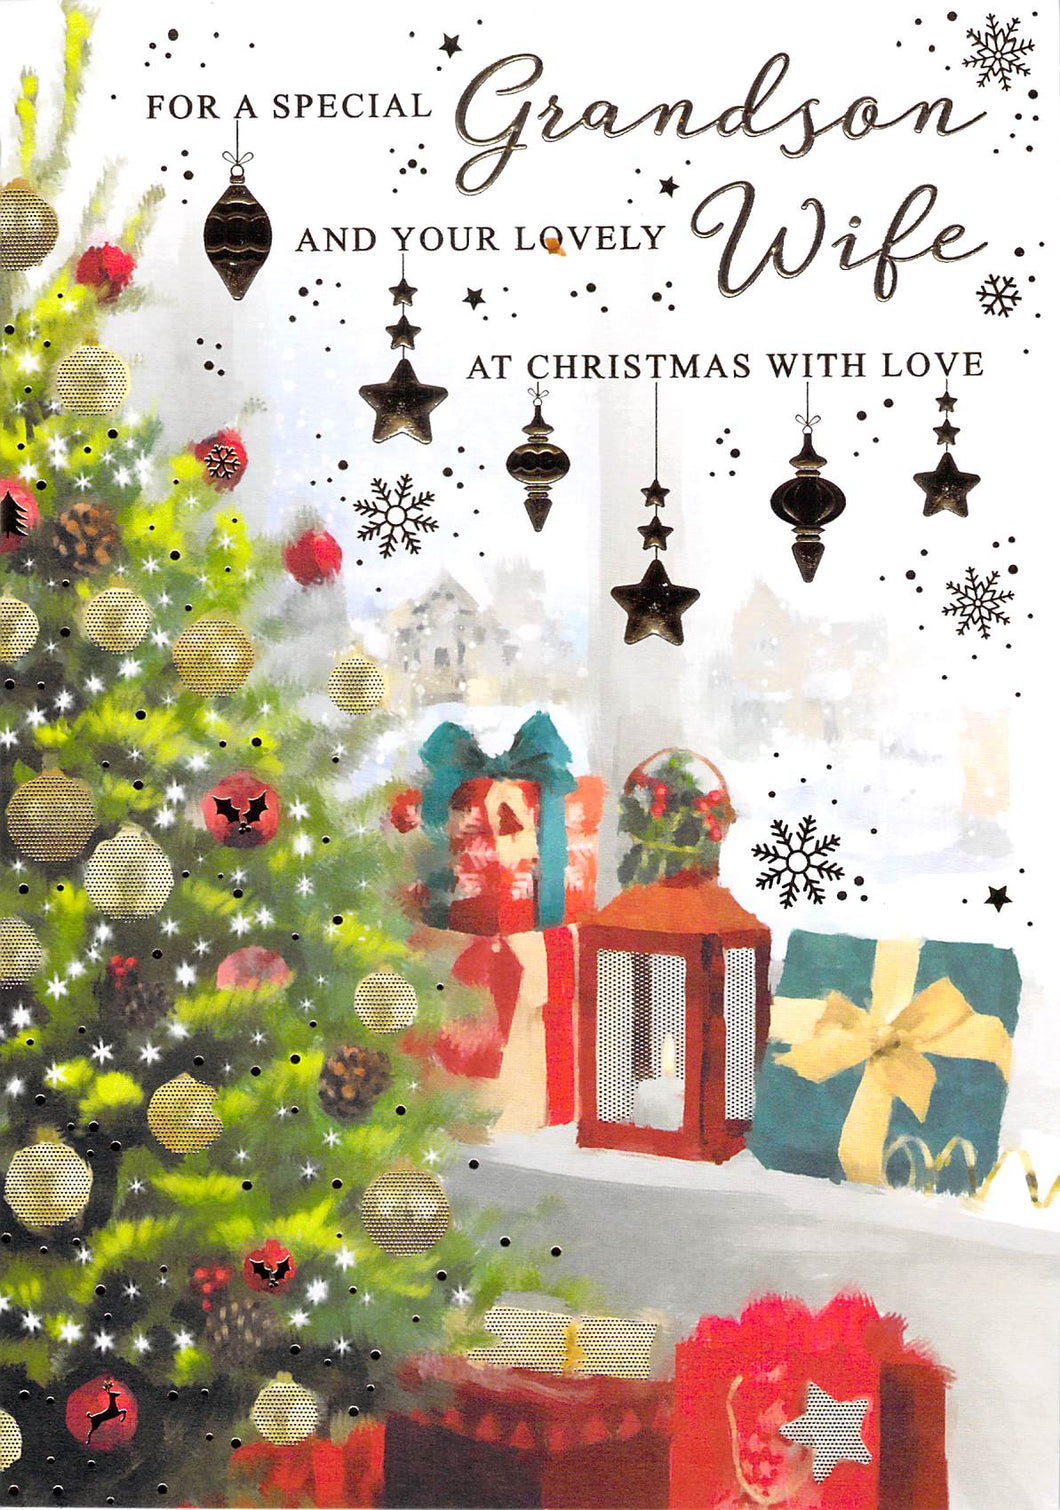 Christmas - Grandson & Wife - Tree - Greeting Card  - Multi Buy Discount